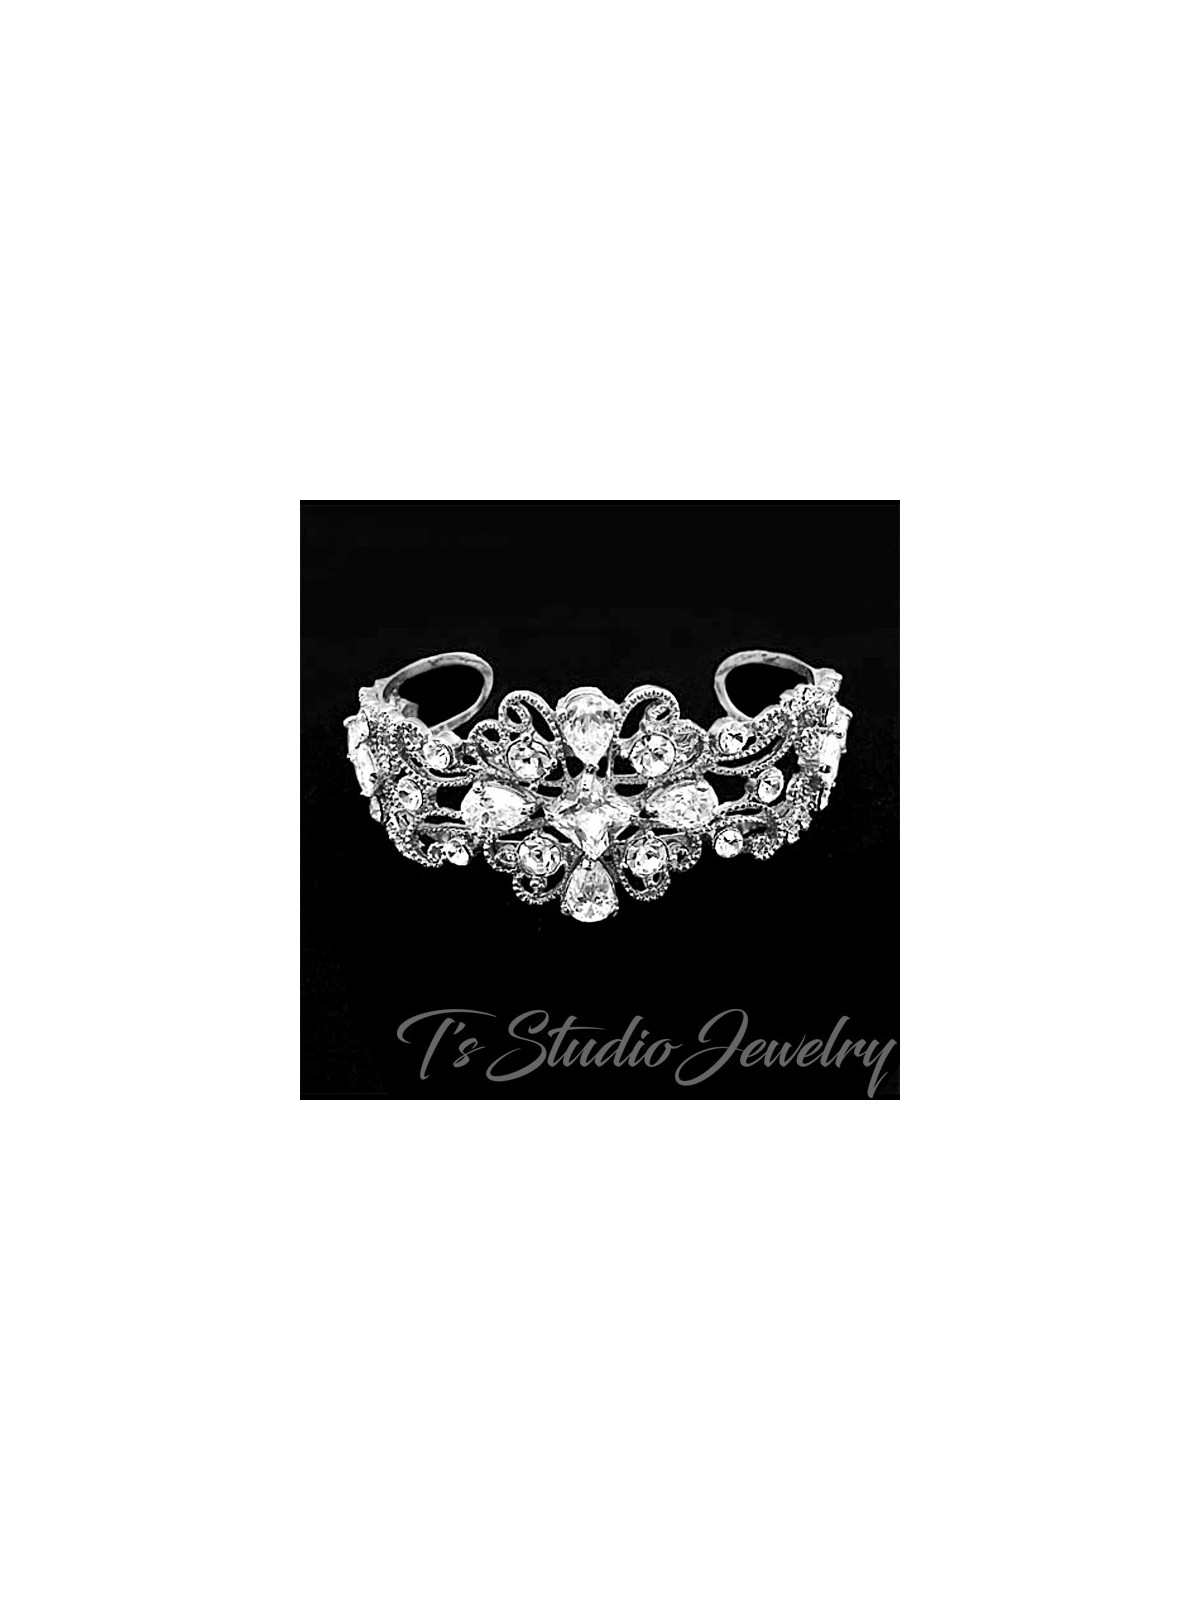 Silver and Crystal Bridal Cuff Bracelet